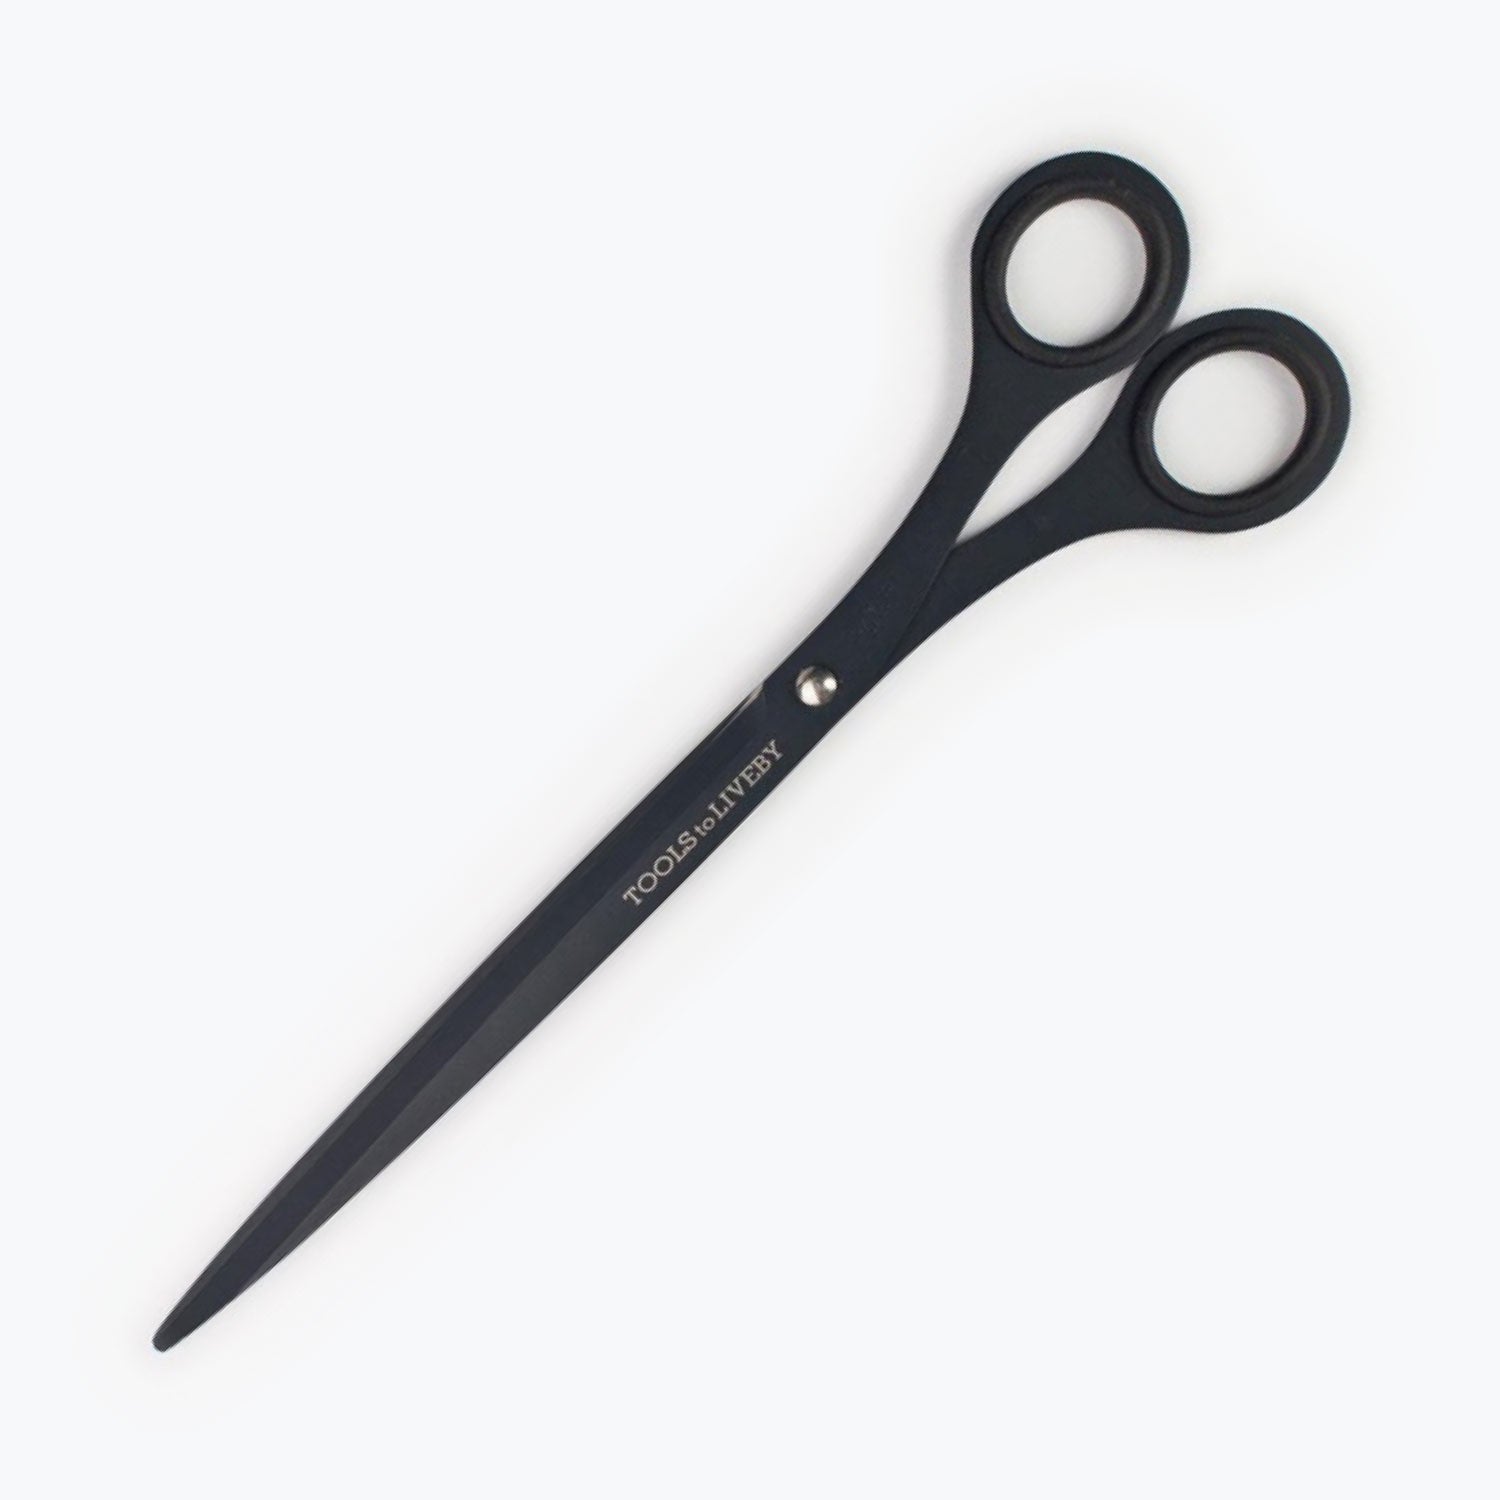 Tools to Liveby - Scissors - Large - Black